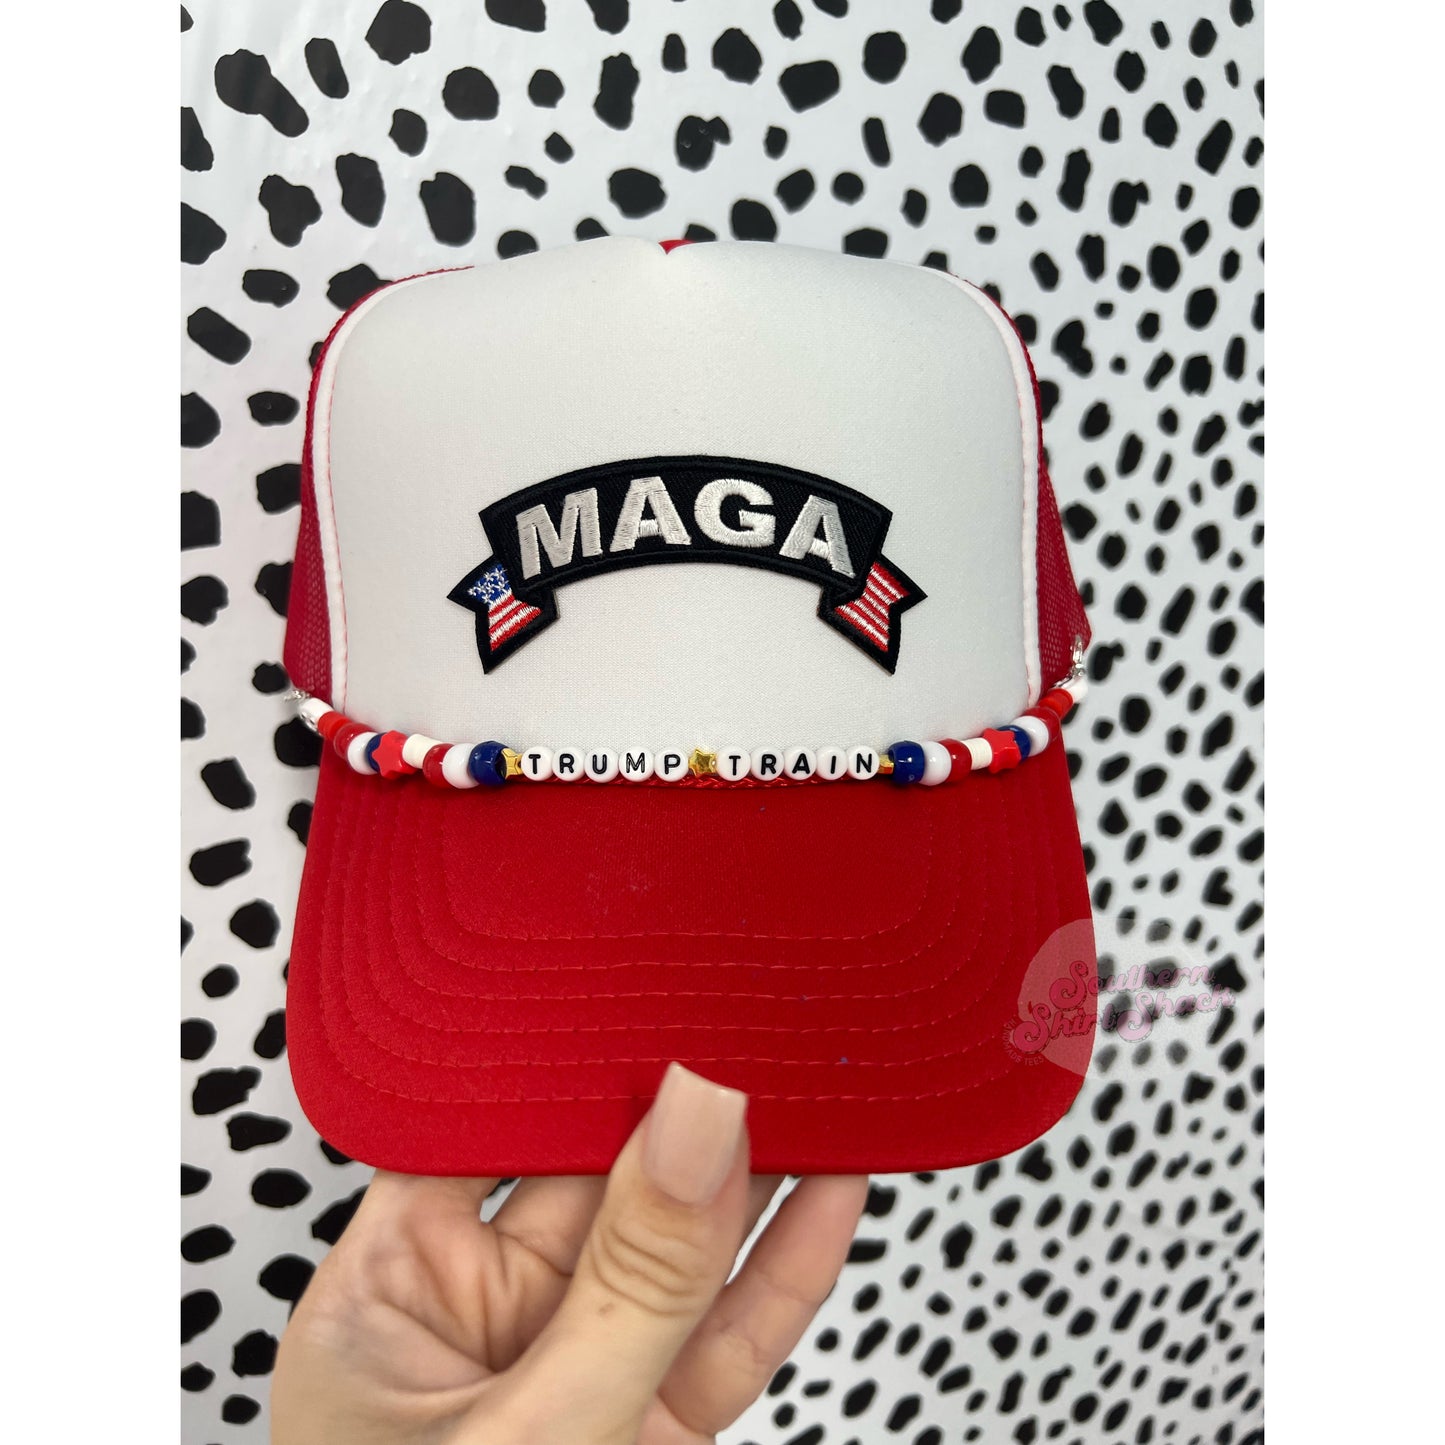 MAGA trucker hat with Trump Train hat charm